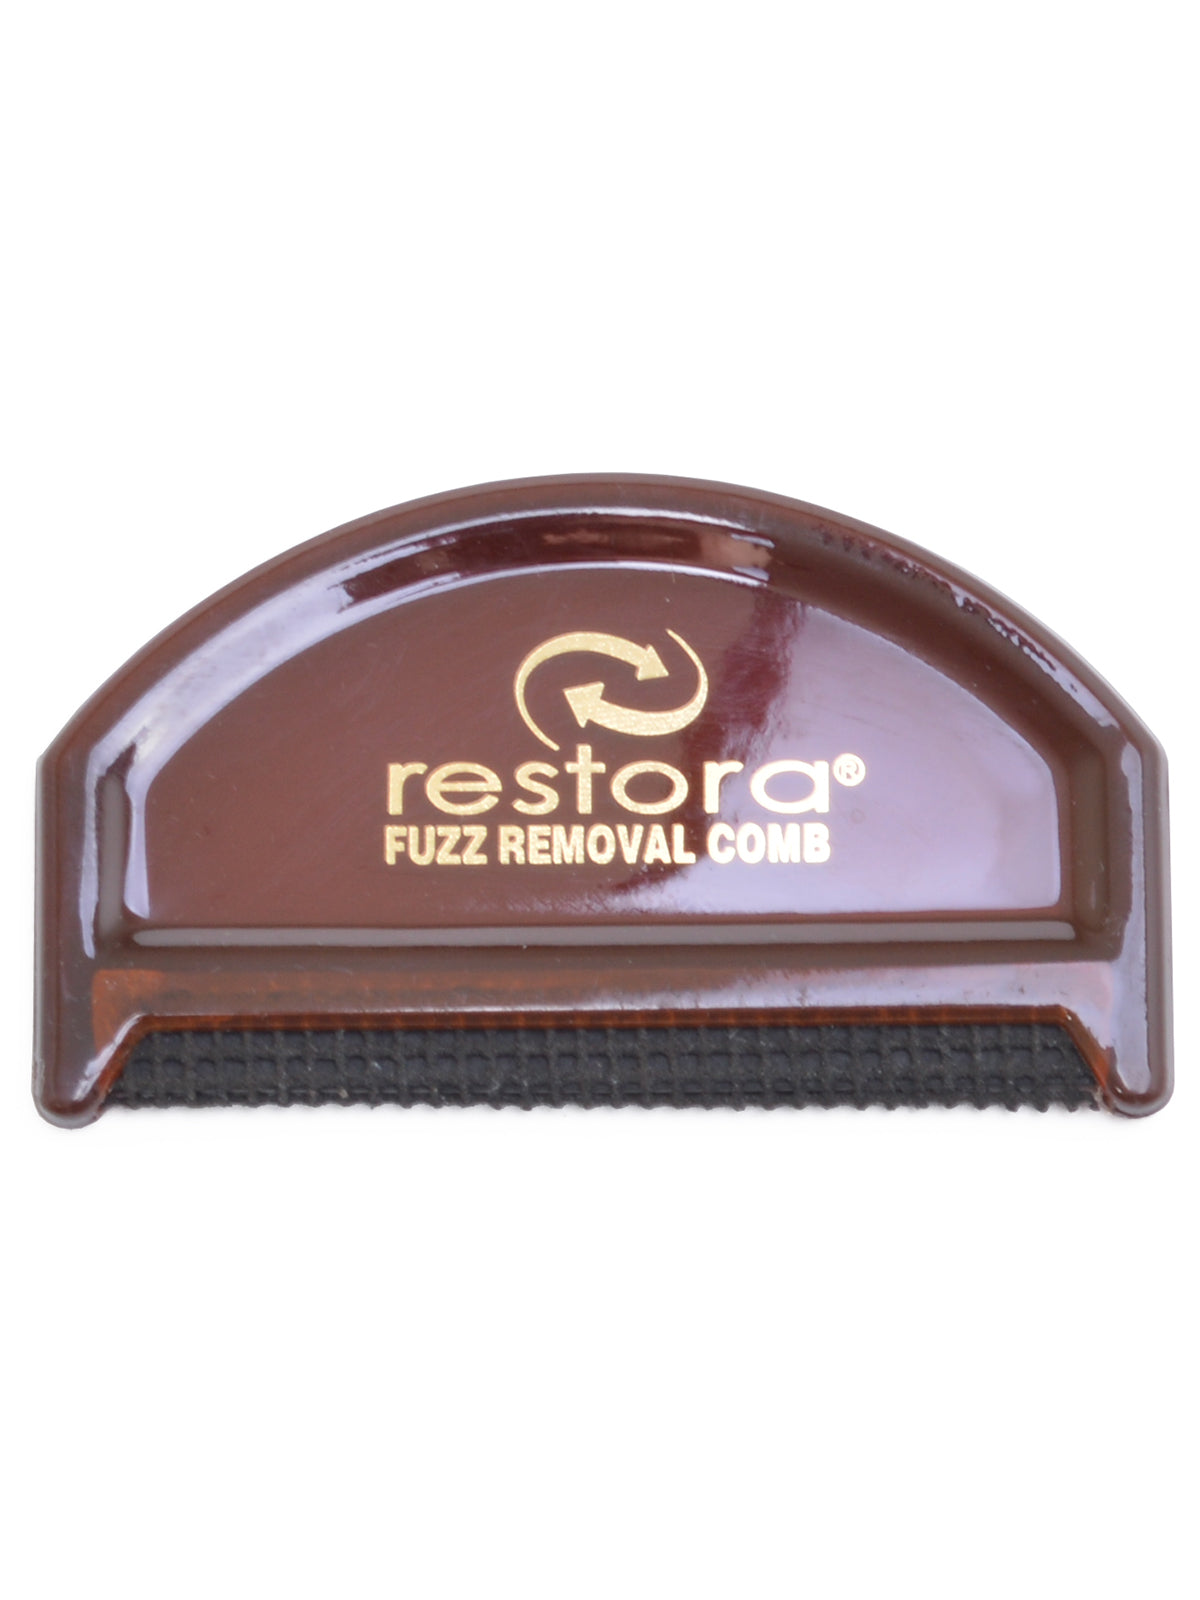 Restora Fuzz Removal Comb